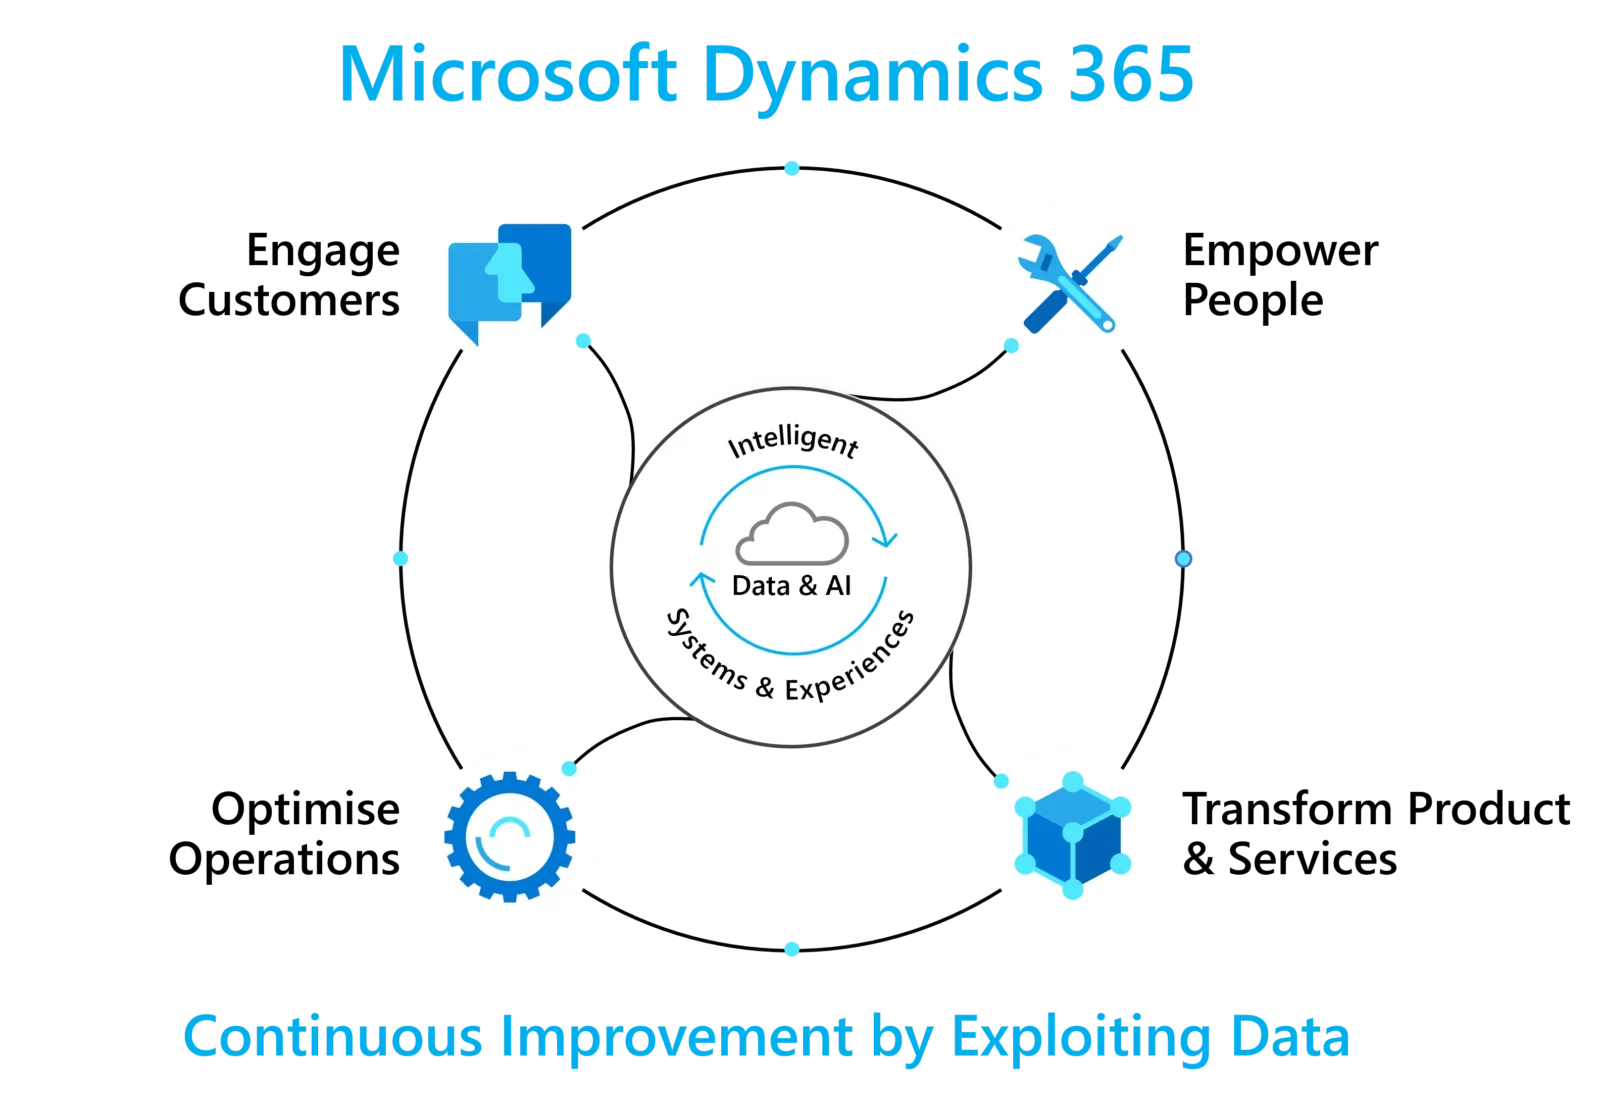 Microsoft Dynamics 365 - Solution Diagram